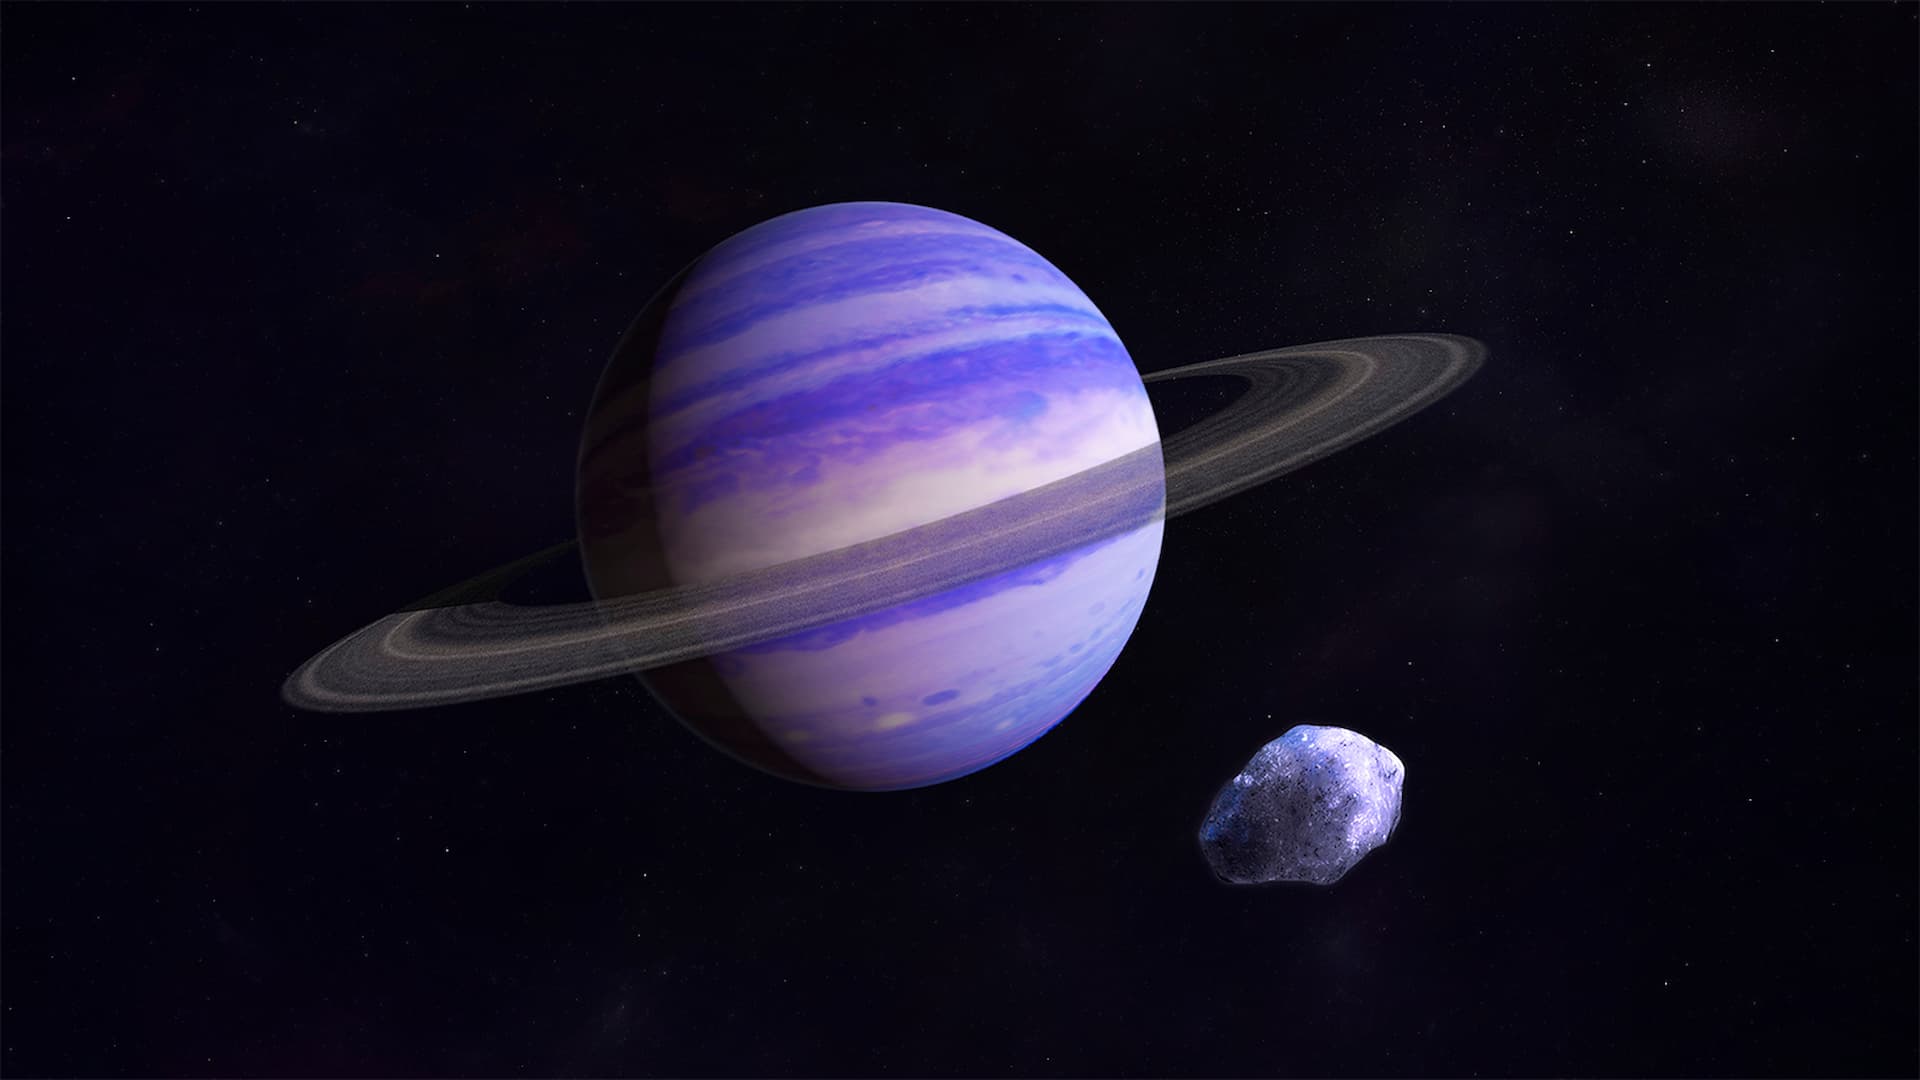 ASI - MoRe-ASI: “Strange new Neptune-sized worlds”